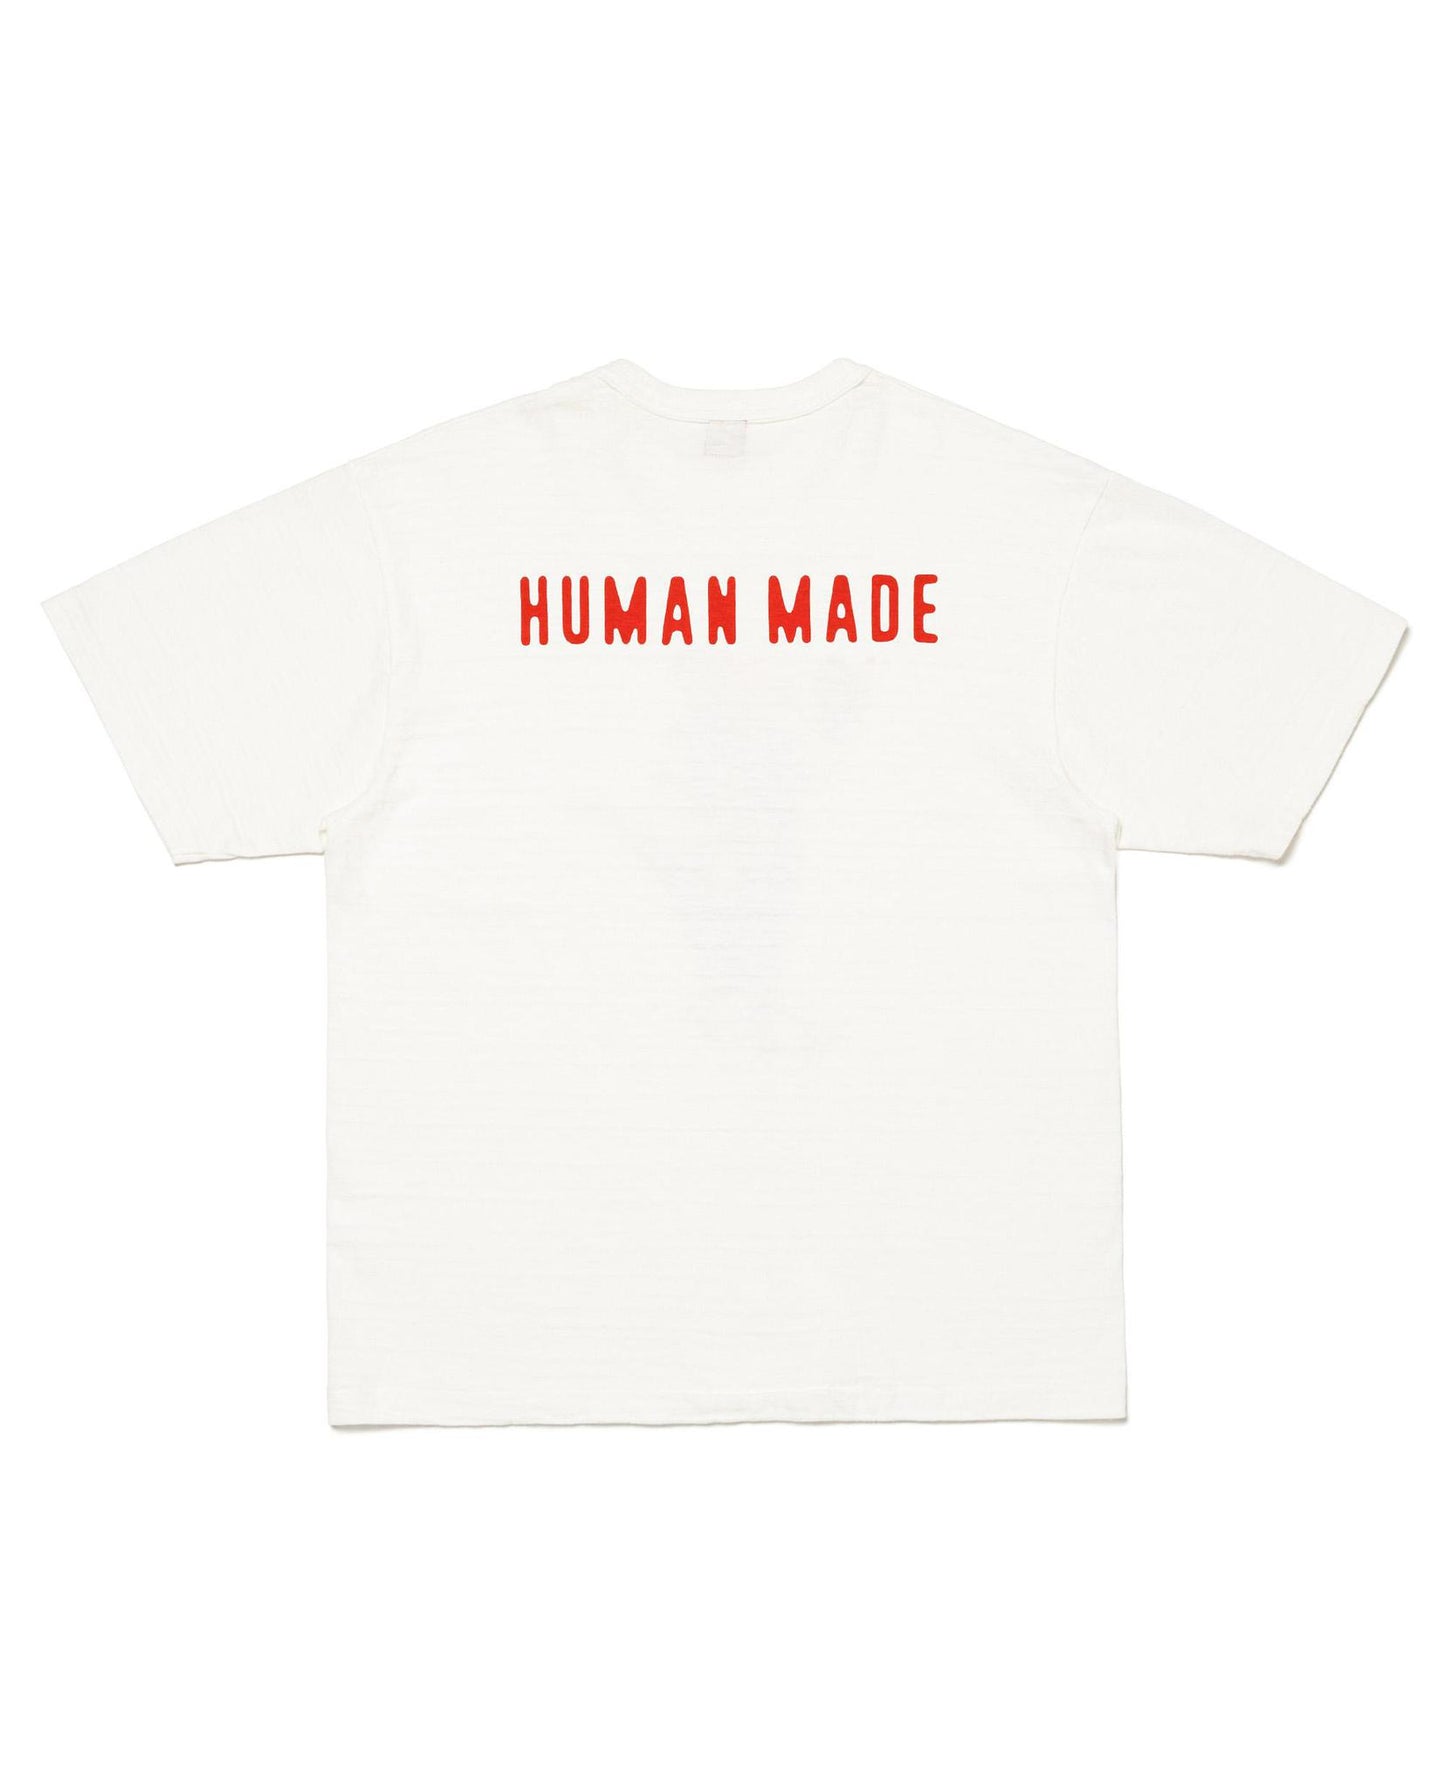 HUMAN MADE GRAPHIC T-SHIRT #10 WHITE 2XL